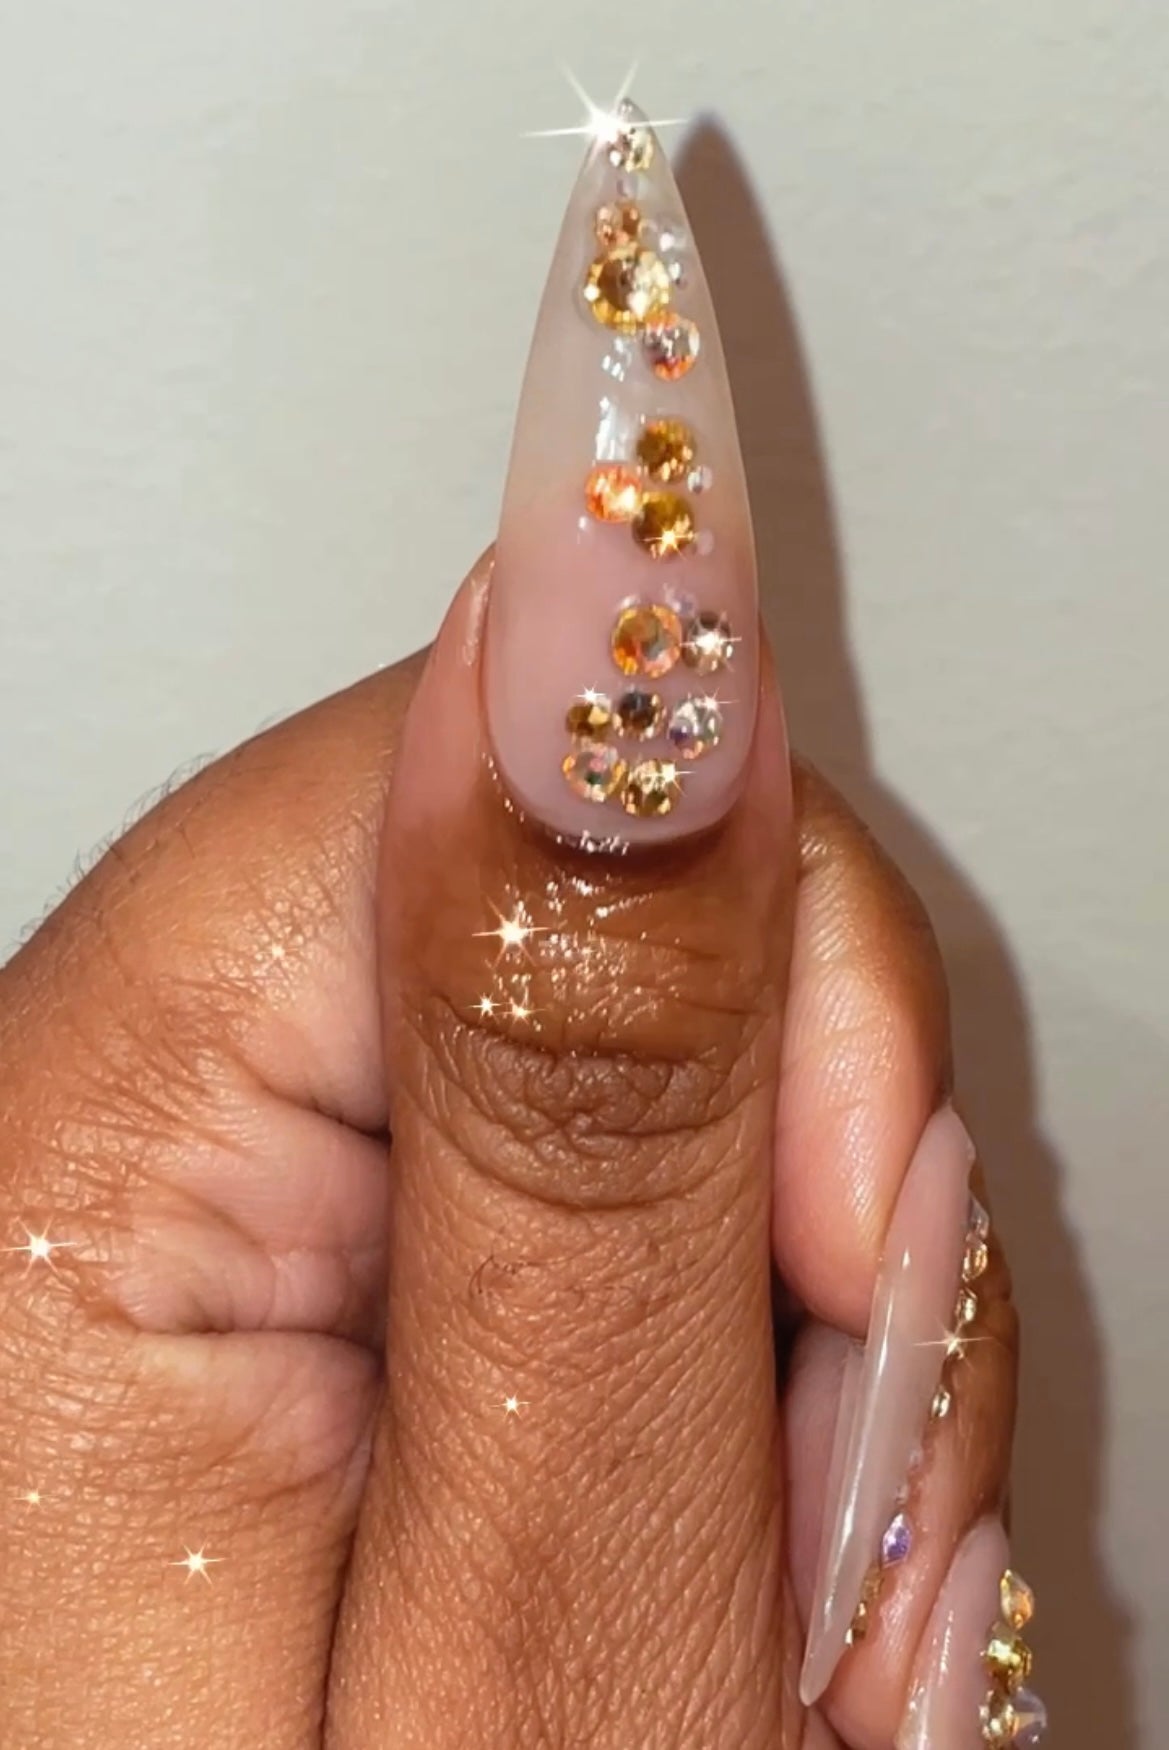 Diamonds & Pearls Press on Nails – St.McNair Beauty